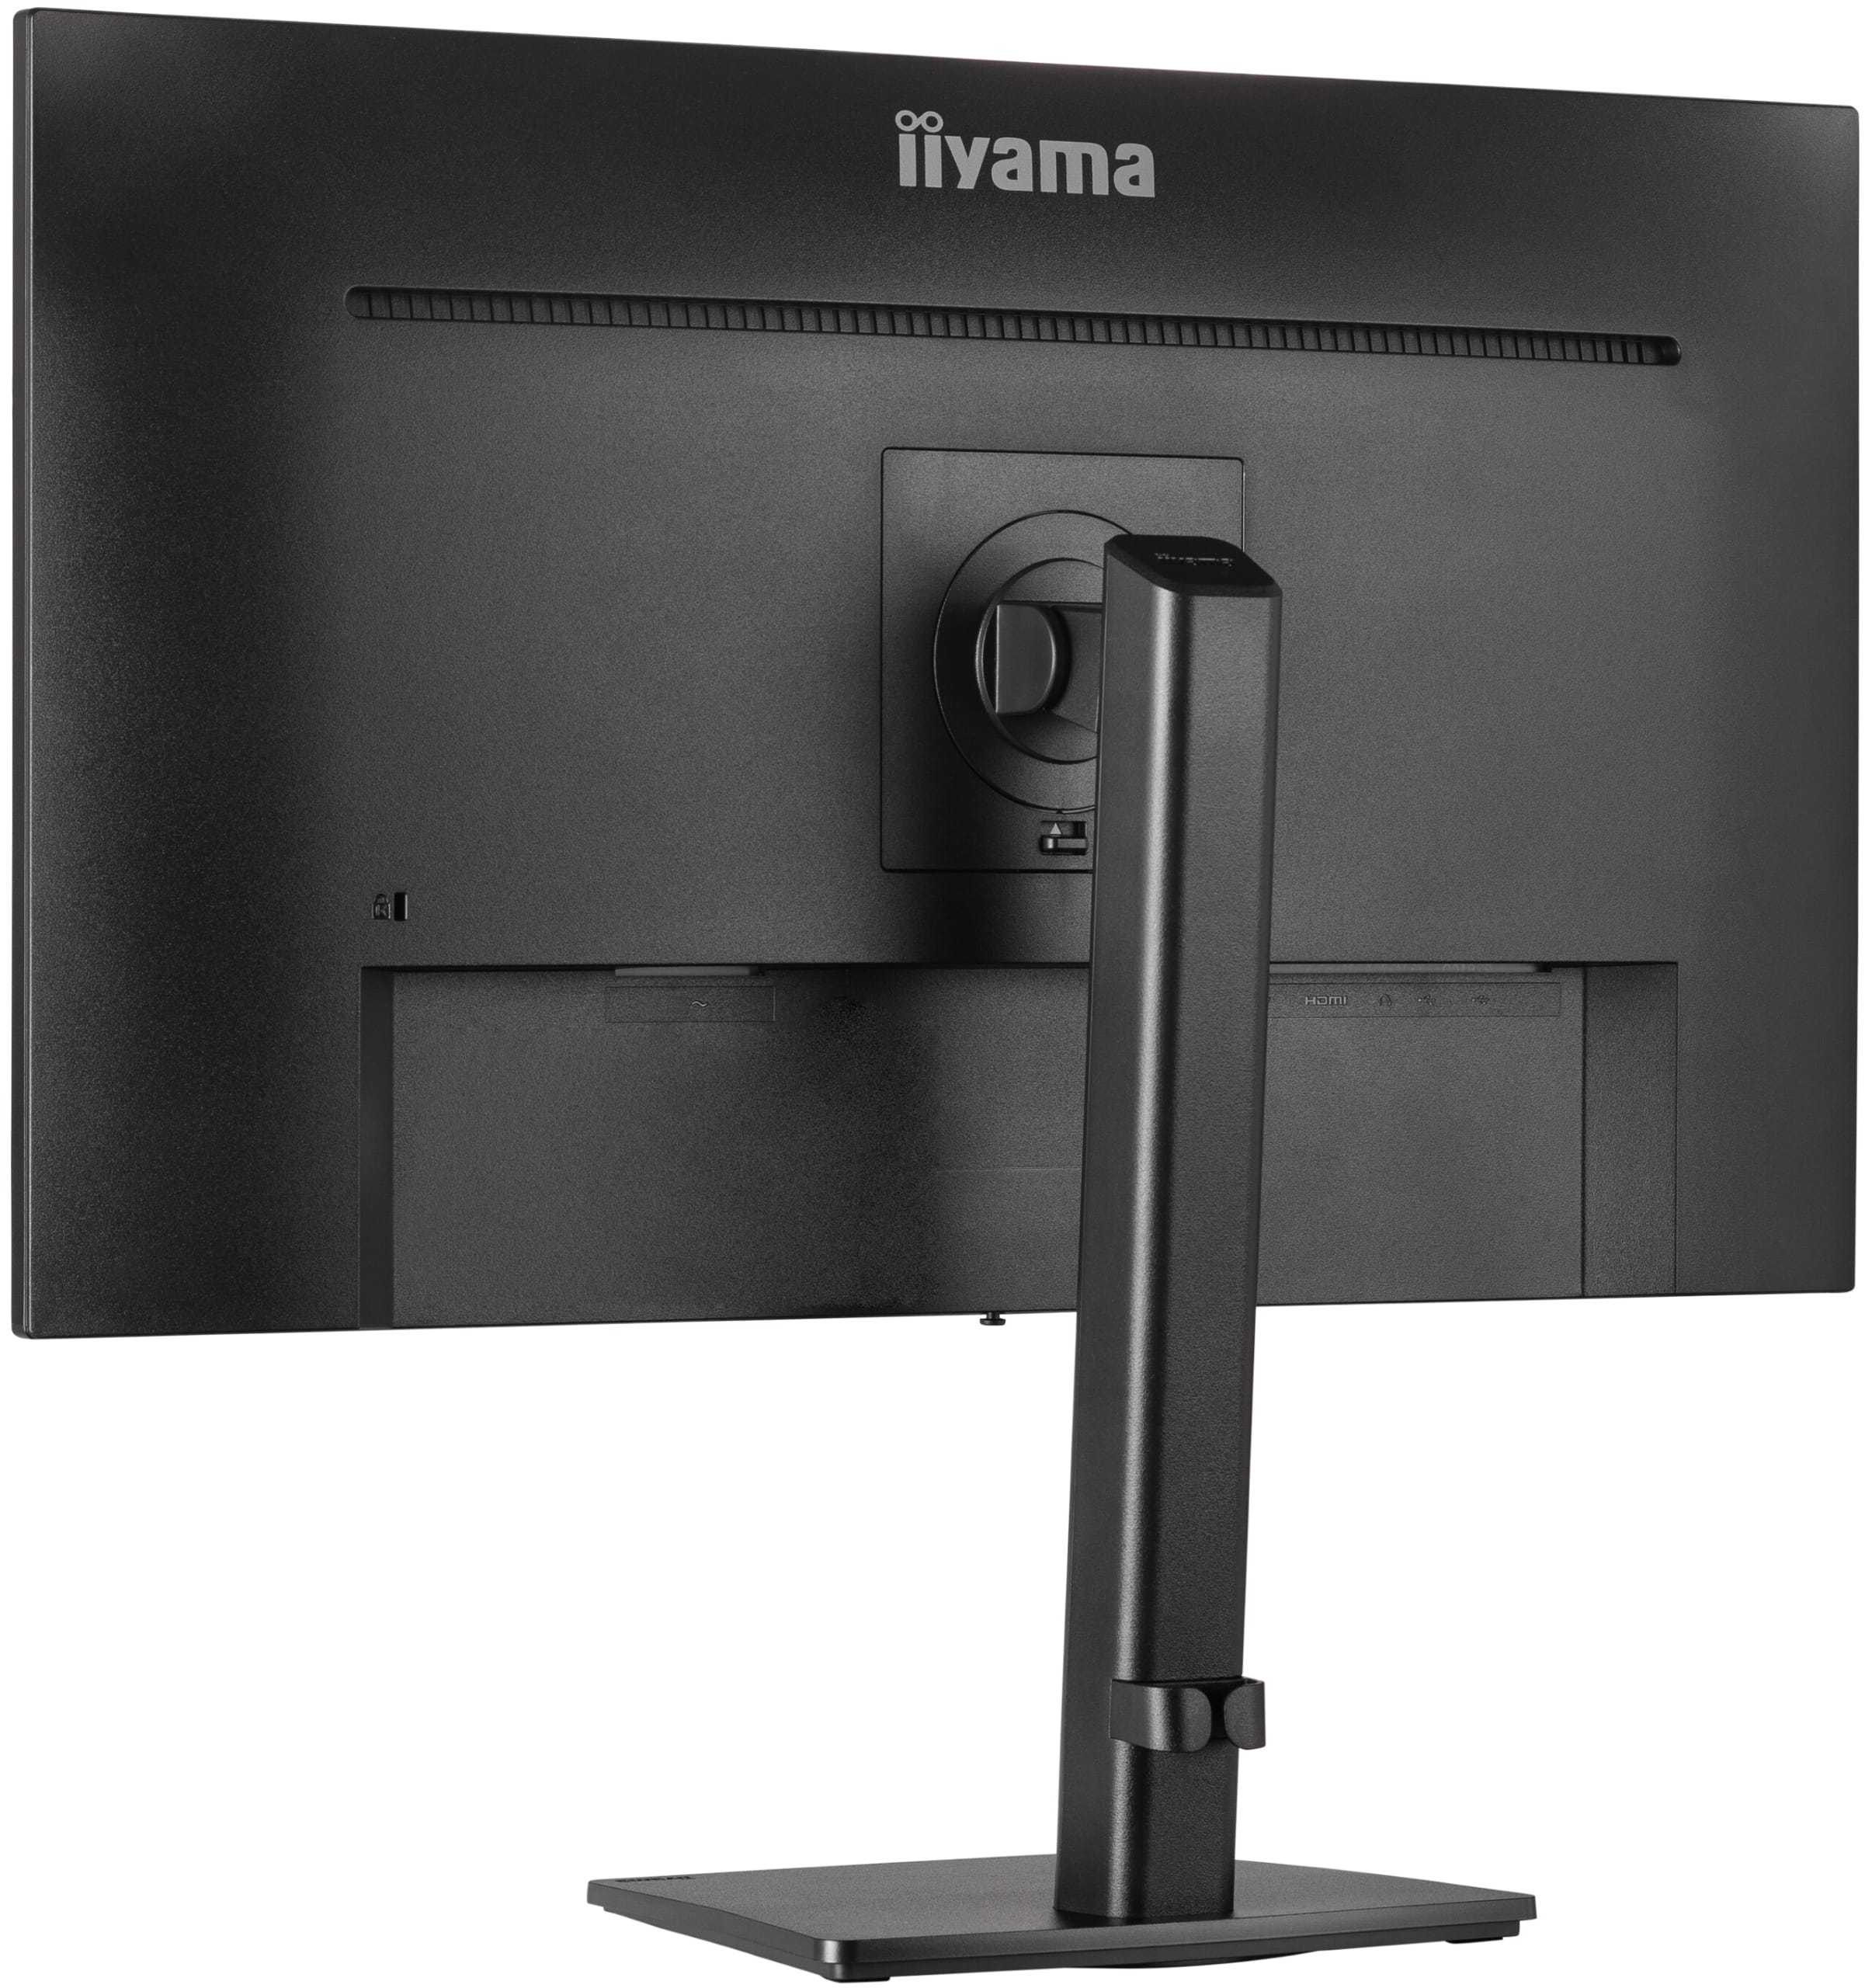 Iiyama Prolite XUB2794HSU-B1 1920 x 1080 FHD Monitor Back Side View